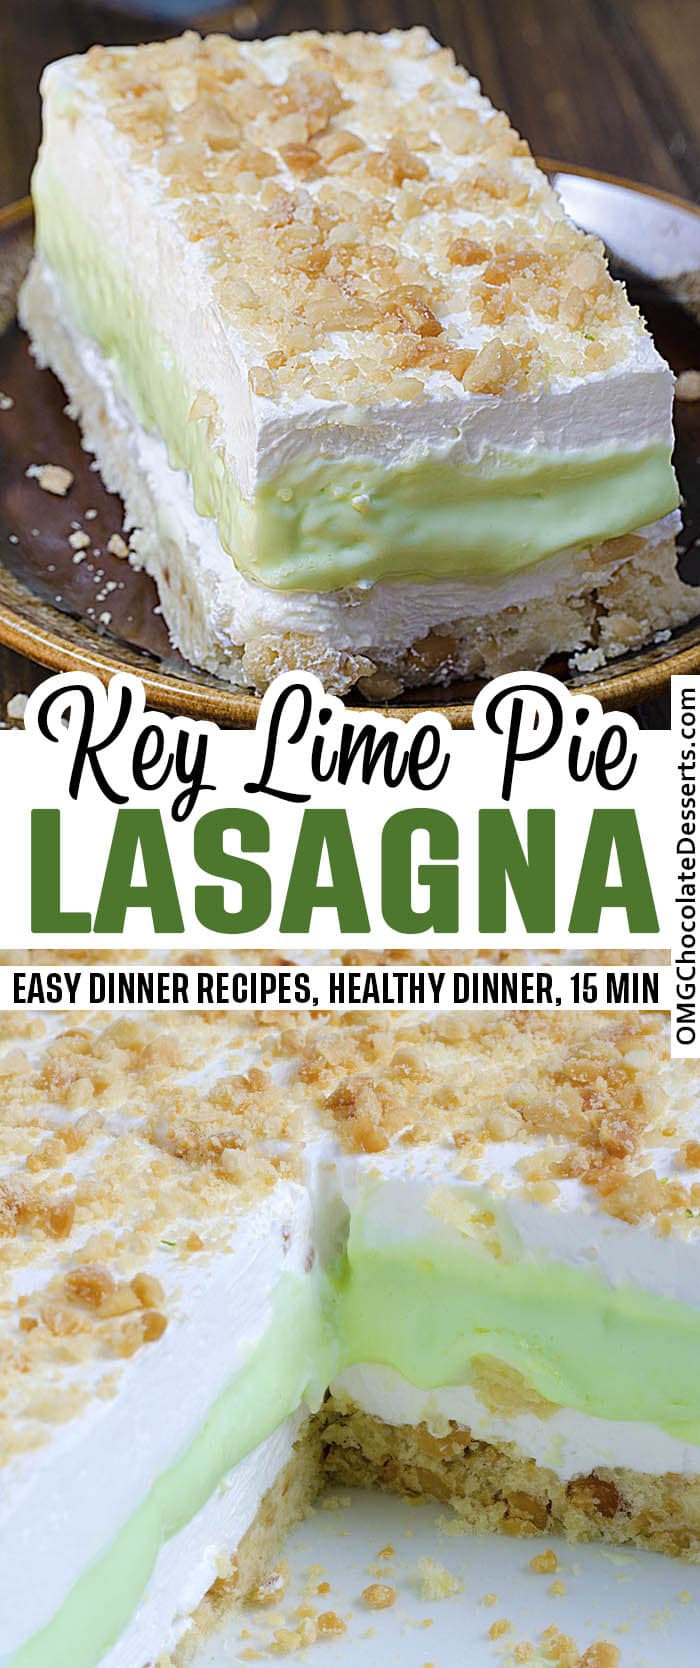 Key Lime Pie Lasagna 